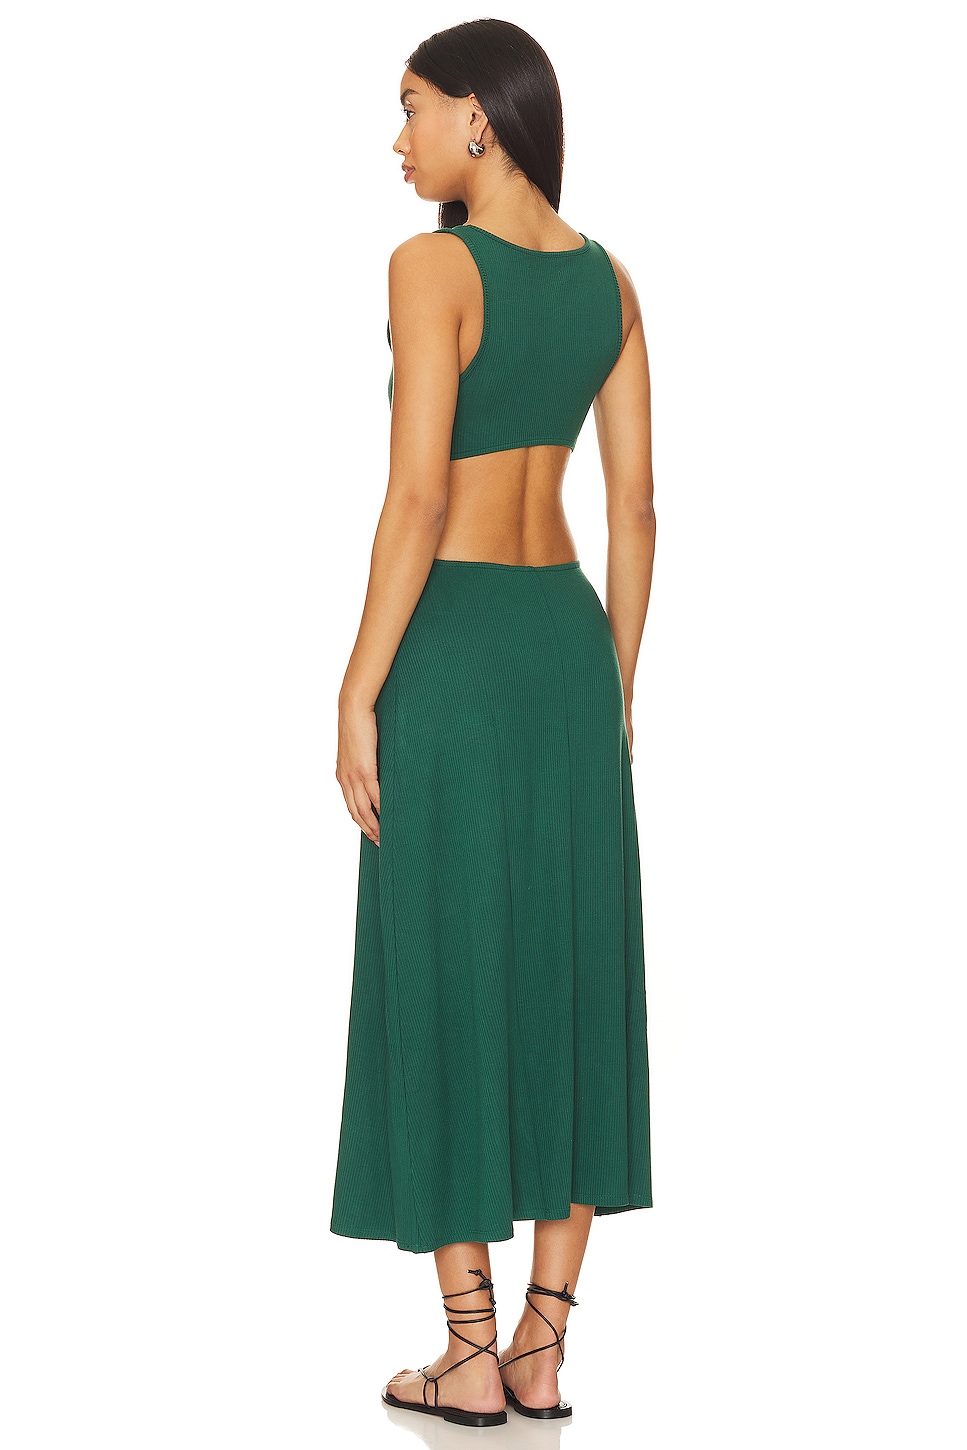 L*Space Margot Dress in Emerald – Bikinibird